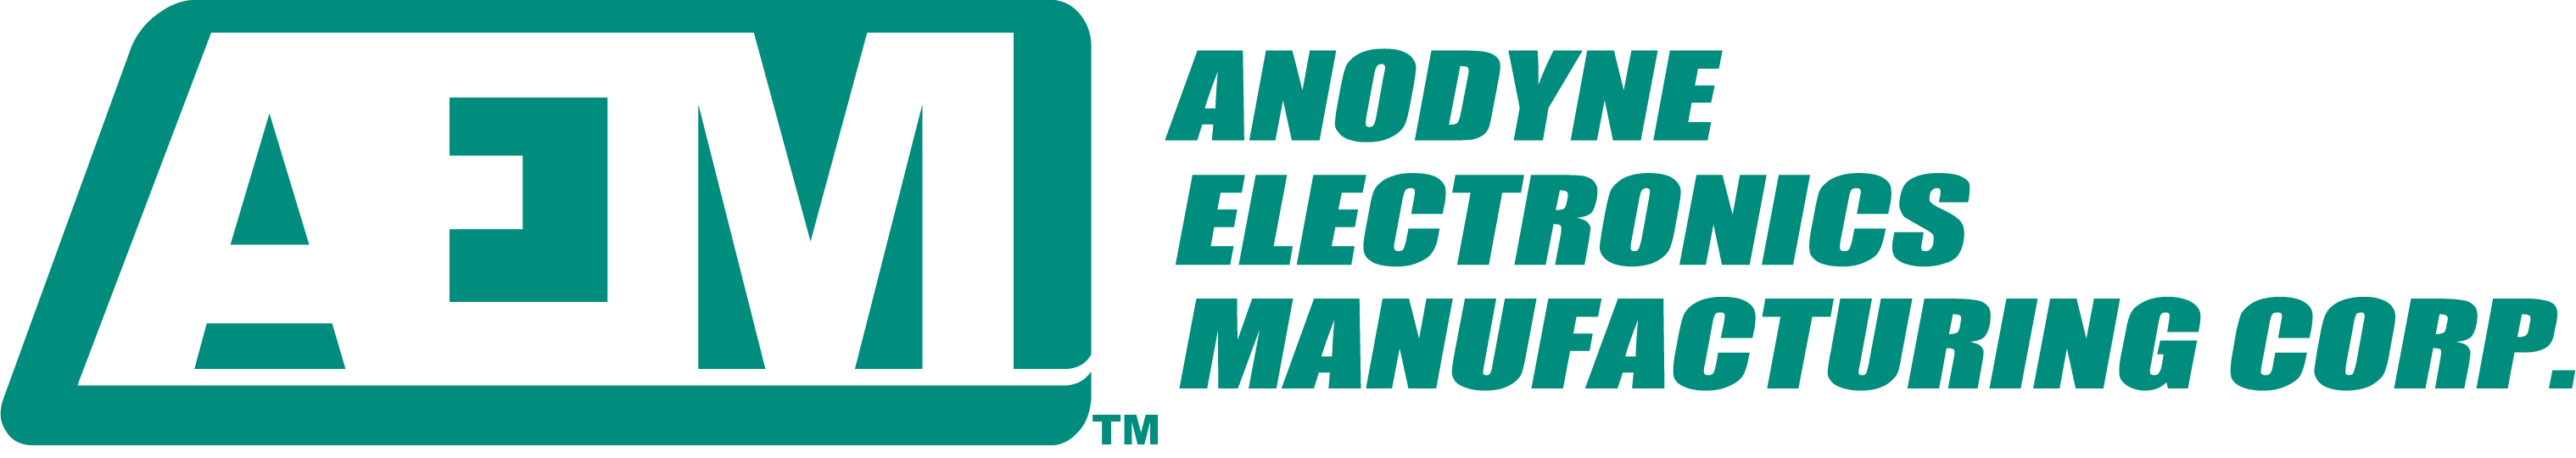 Anodyne Electronics Manufacturing Corp (AEM)